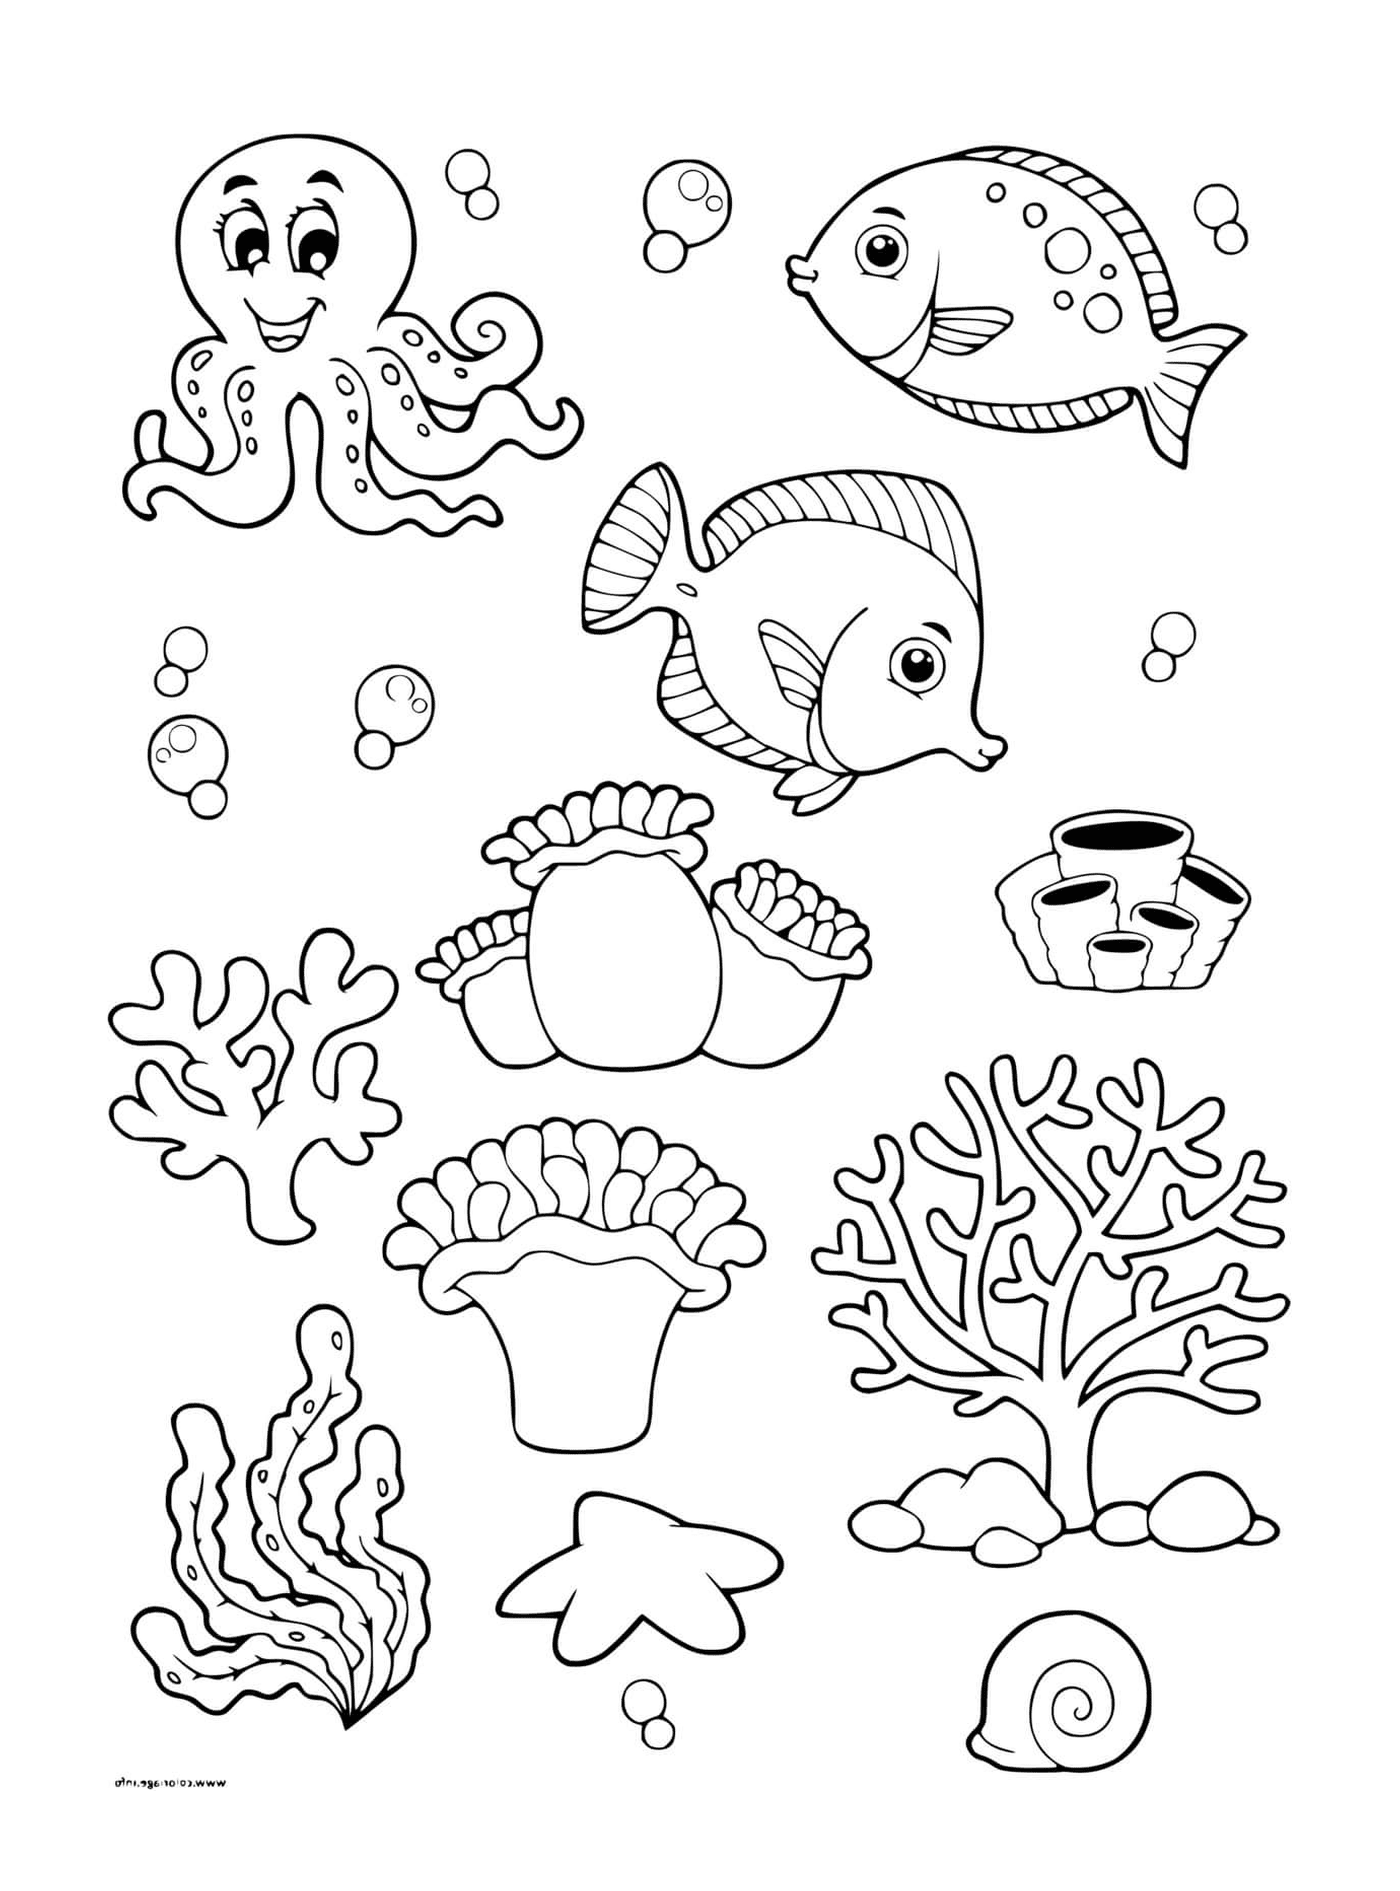  Fondo marino con varios animales marinos 